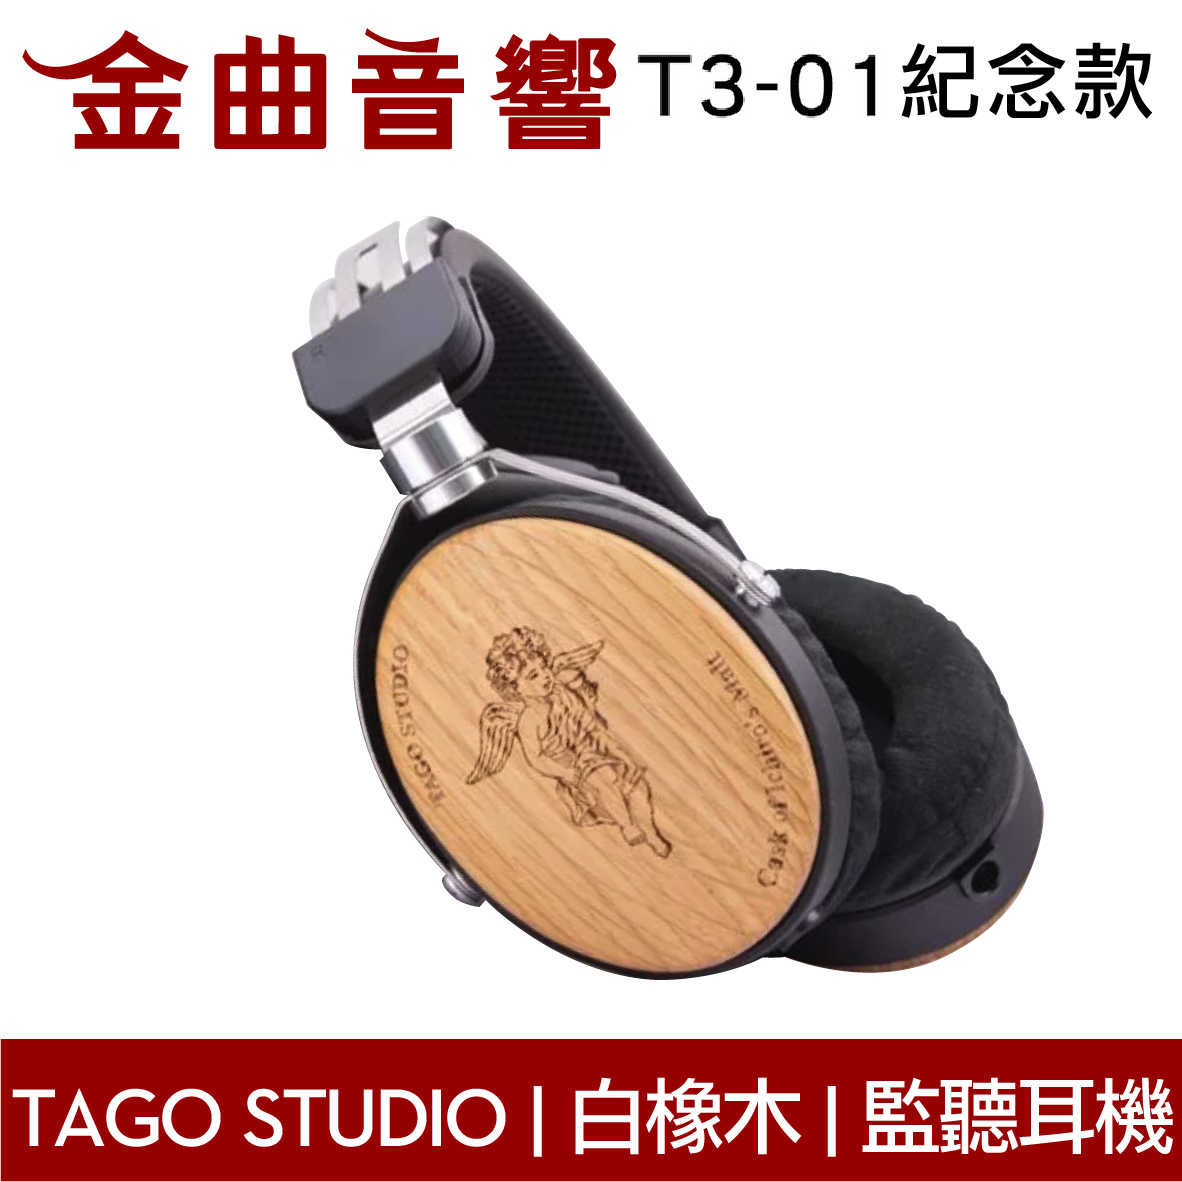 TAGO STUDIO T3-01 Historic Phone 紀念款酒桶白橡木外殼耳罩式耳機